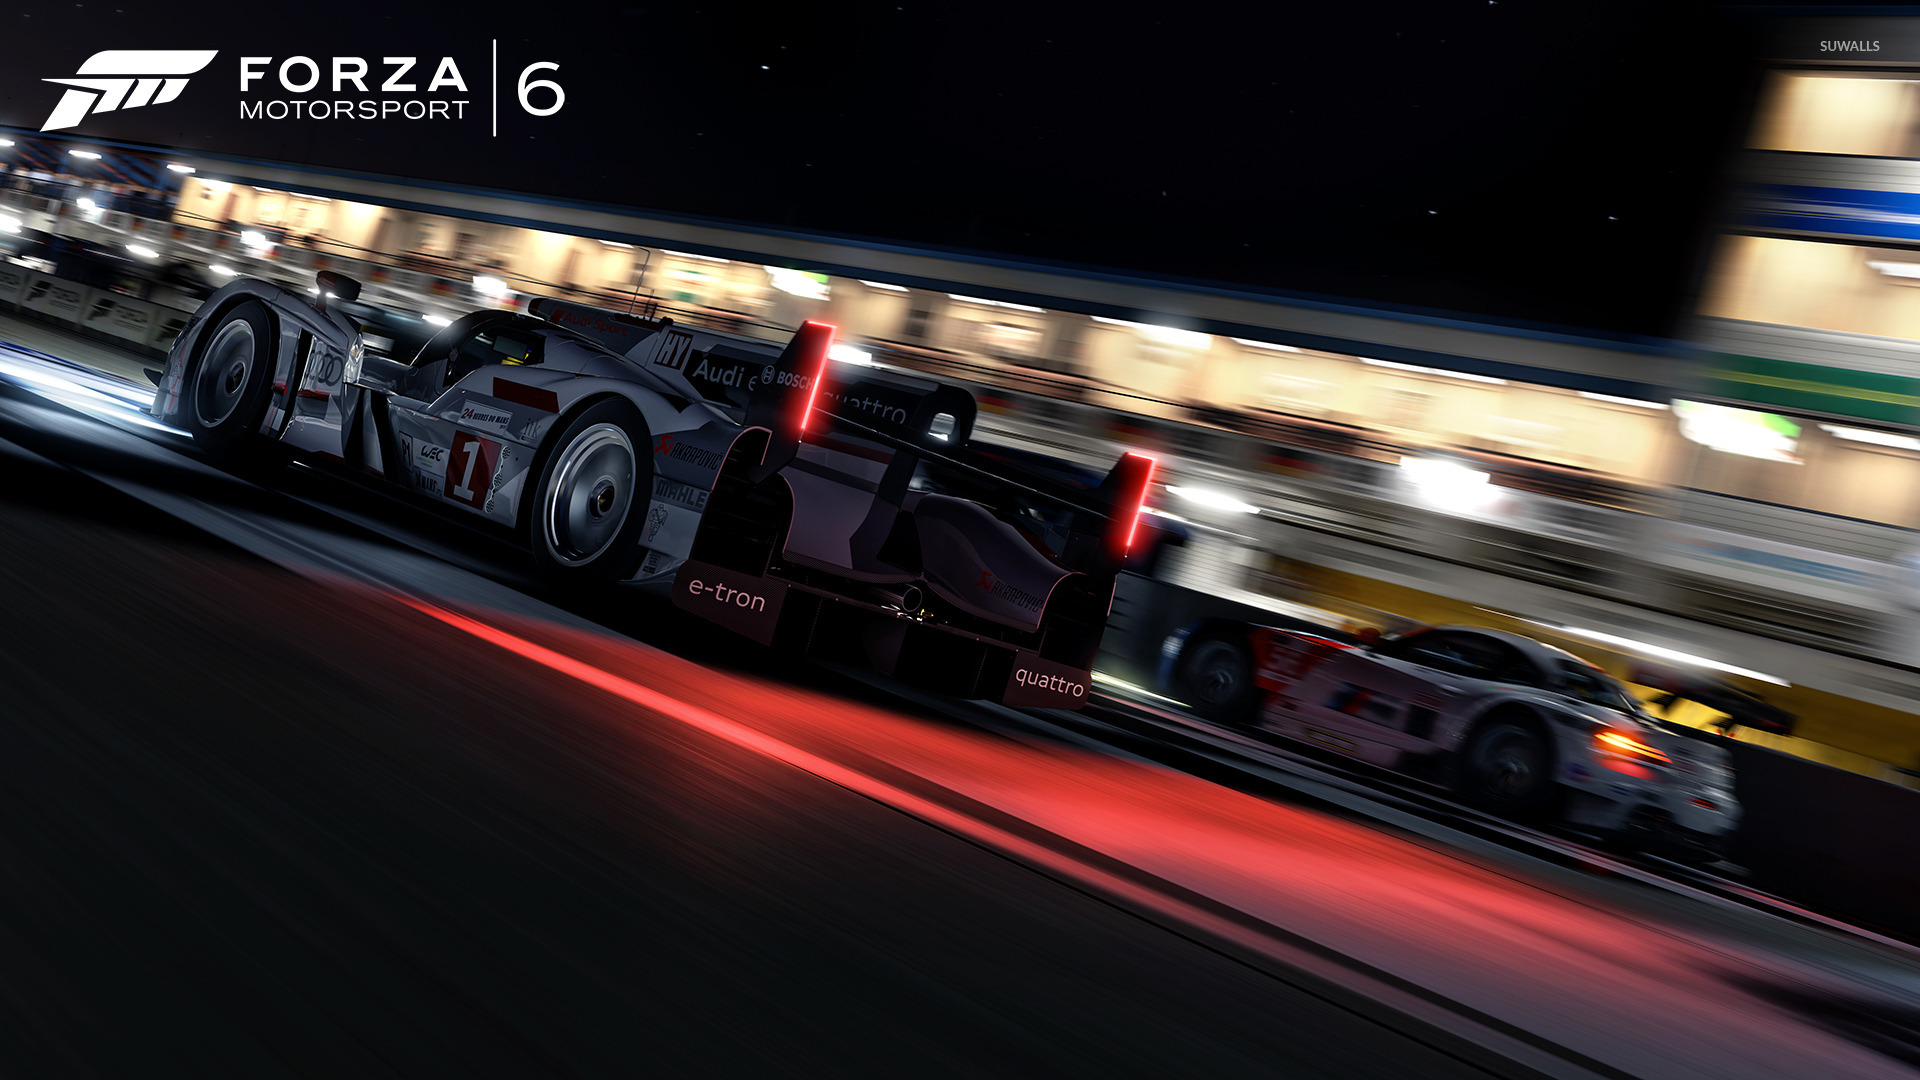 Tron Quattro Forza Motorsport Wallpaper Game